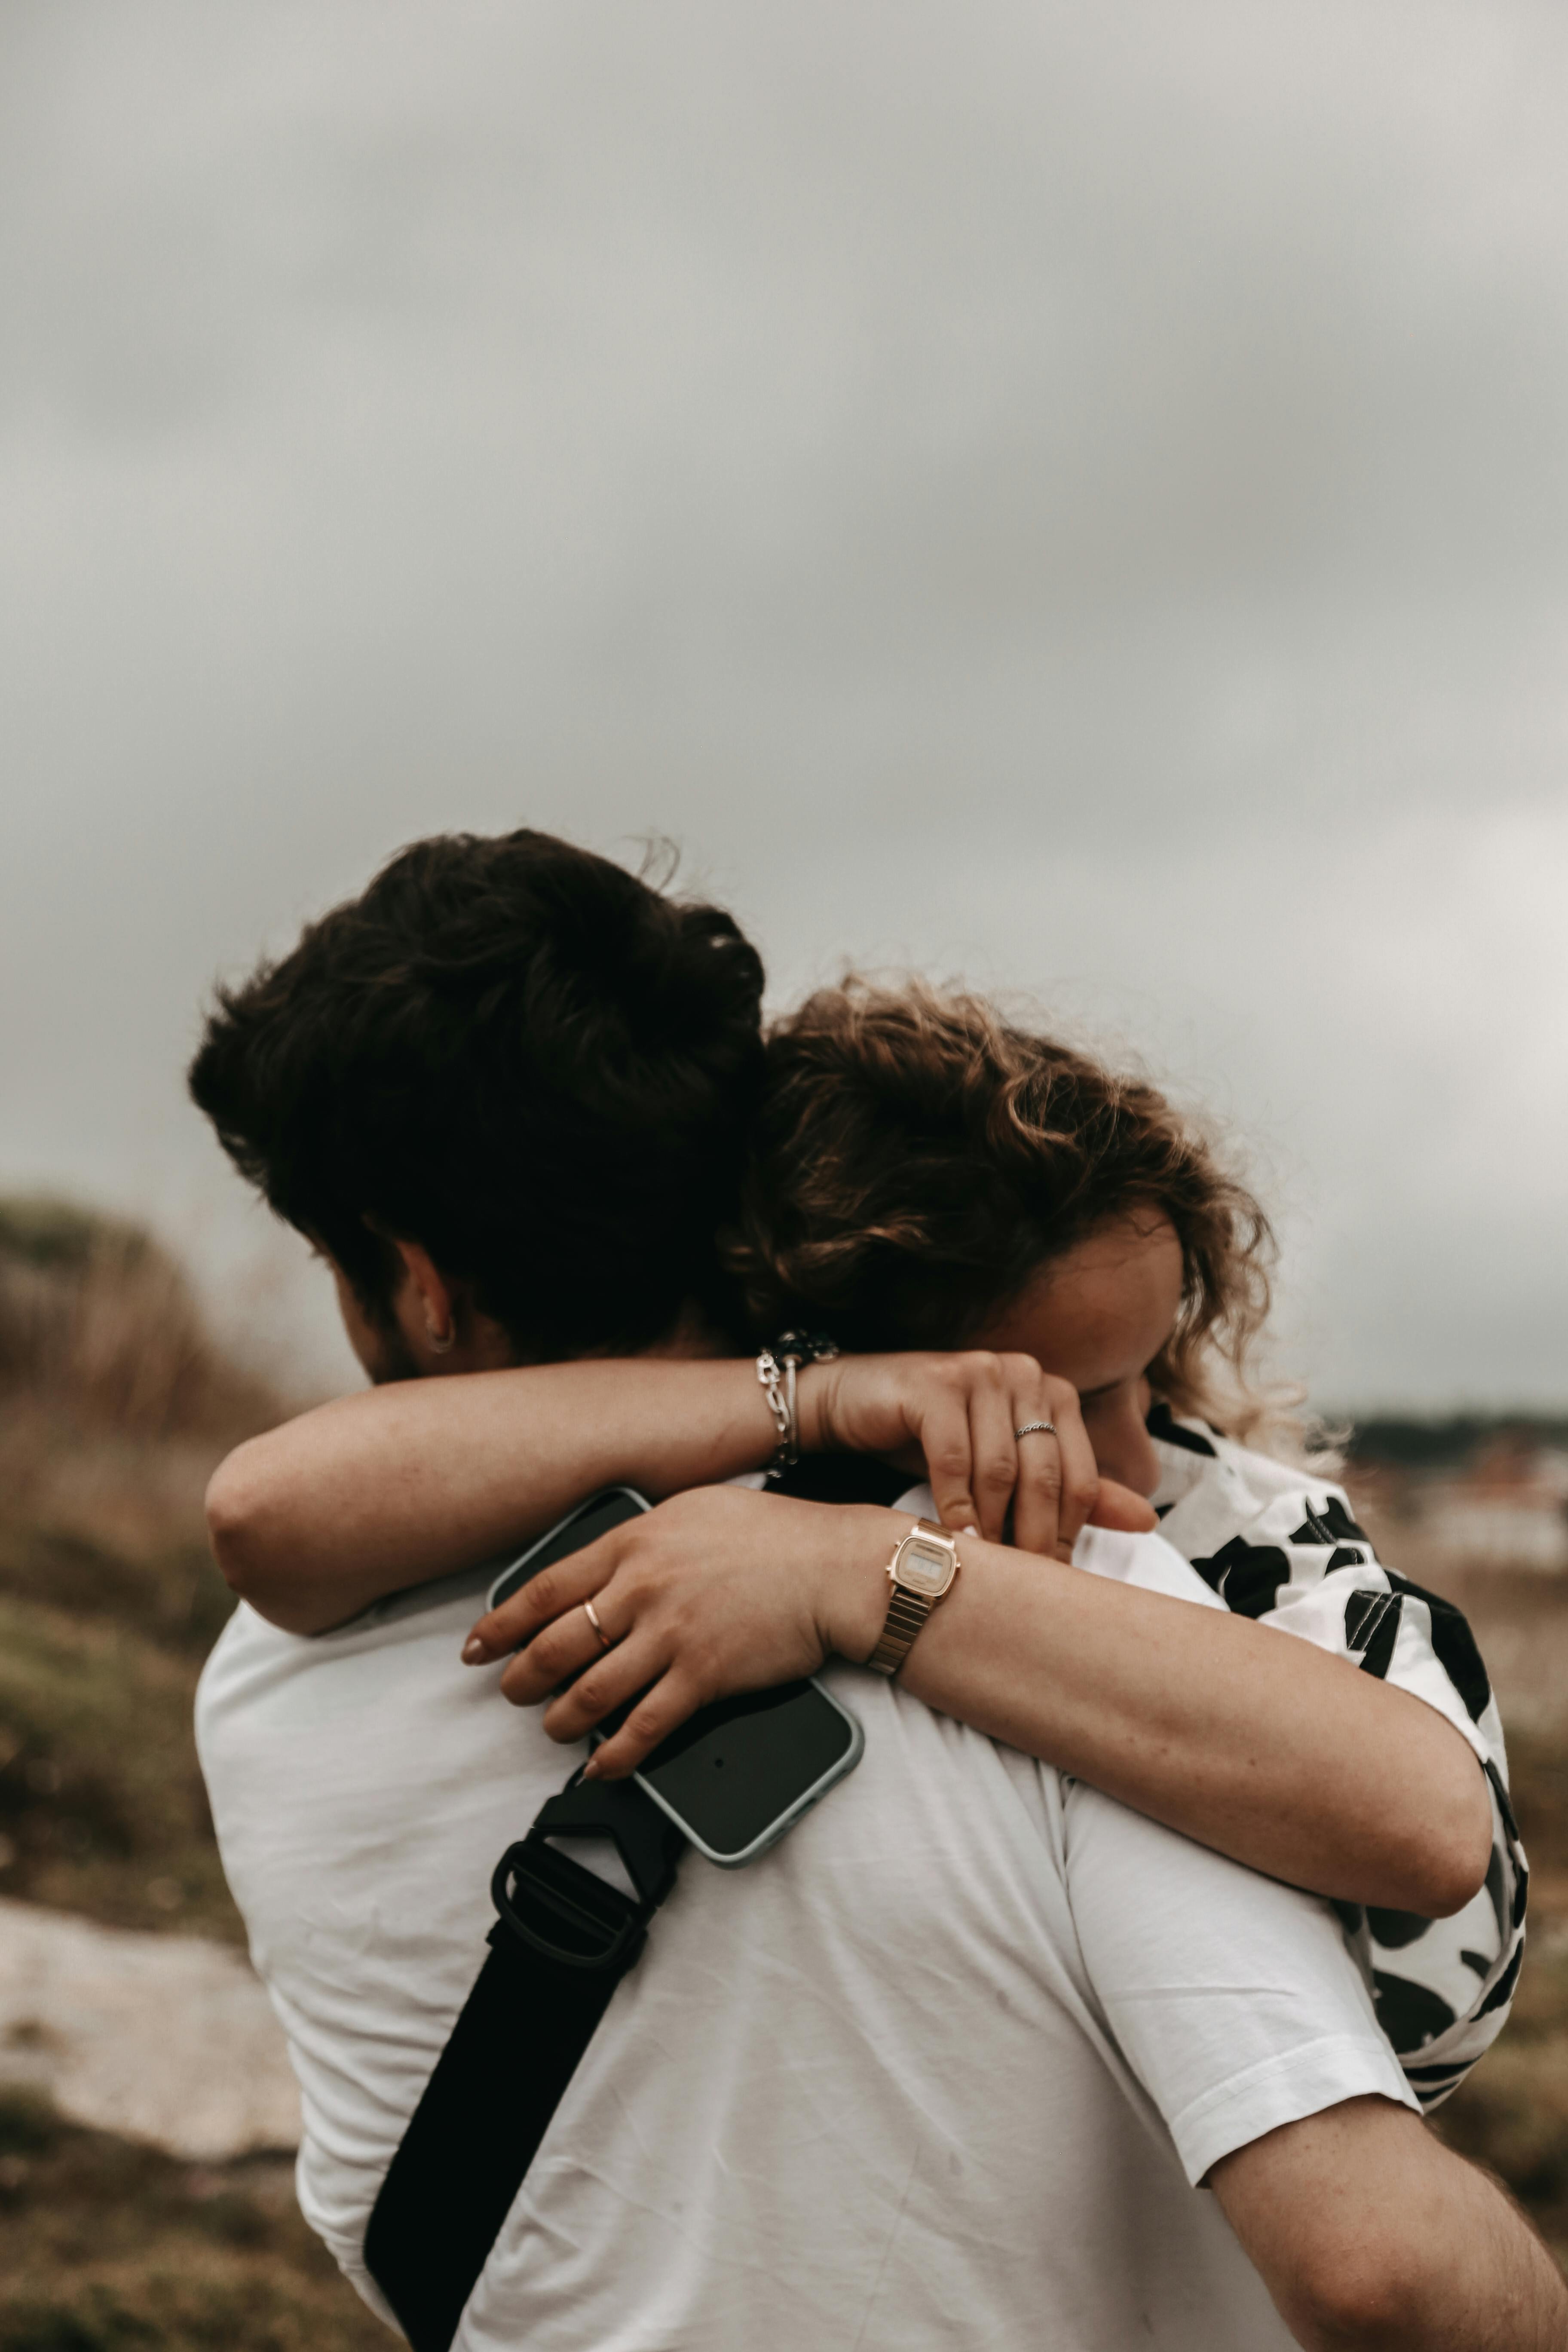 A couple hugging | Source: Pexels